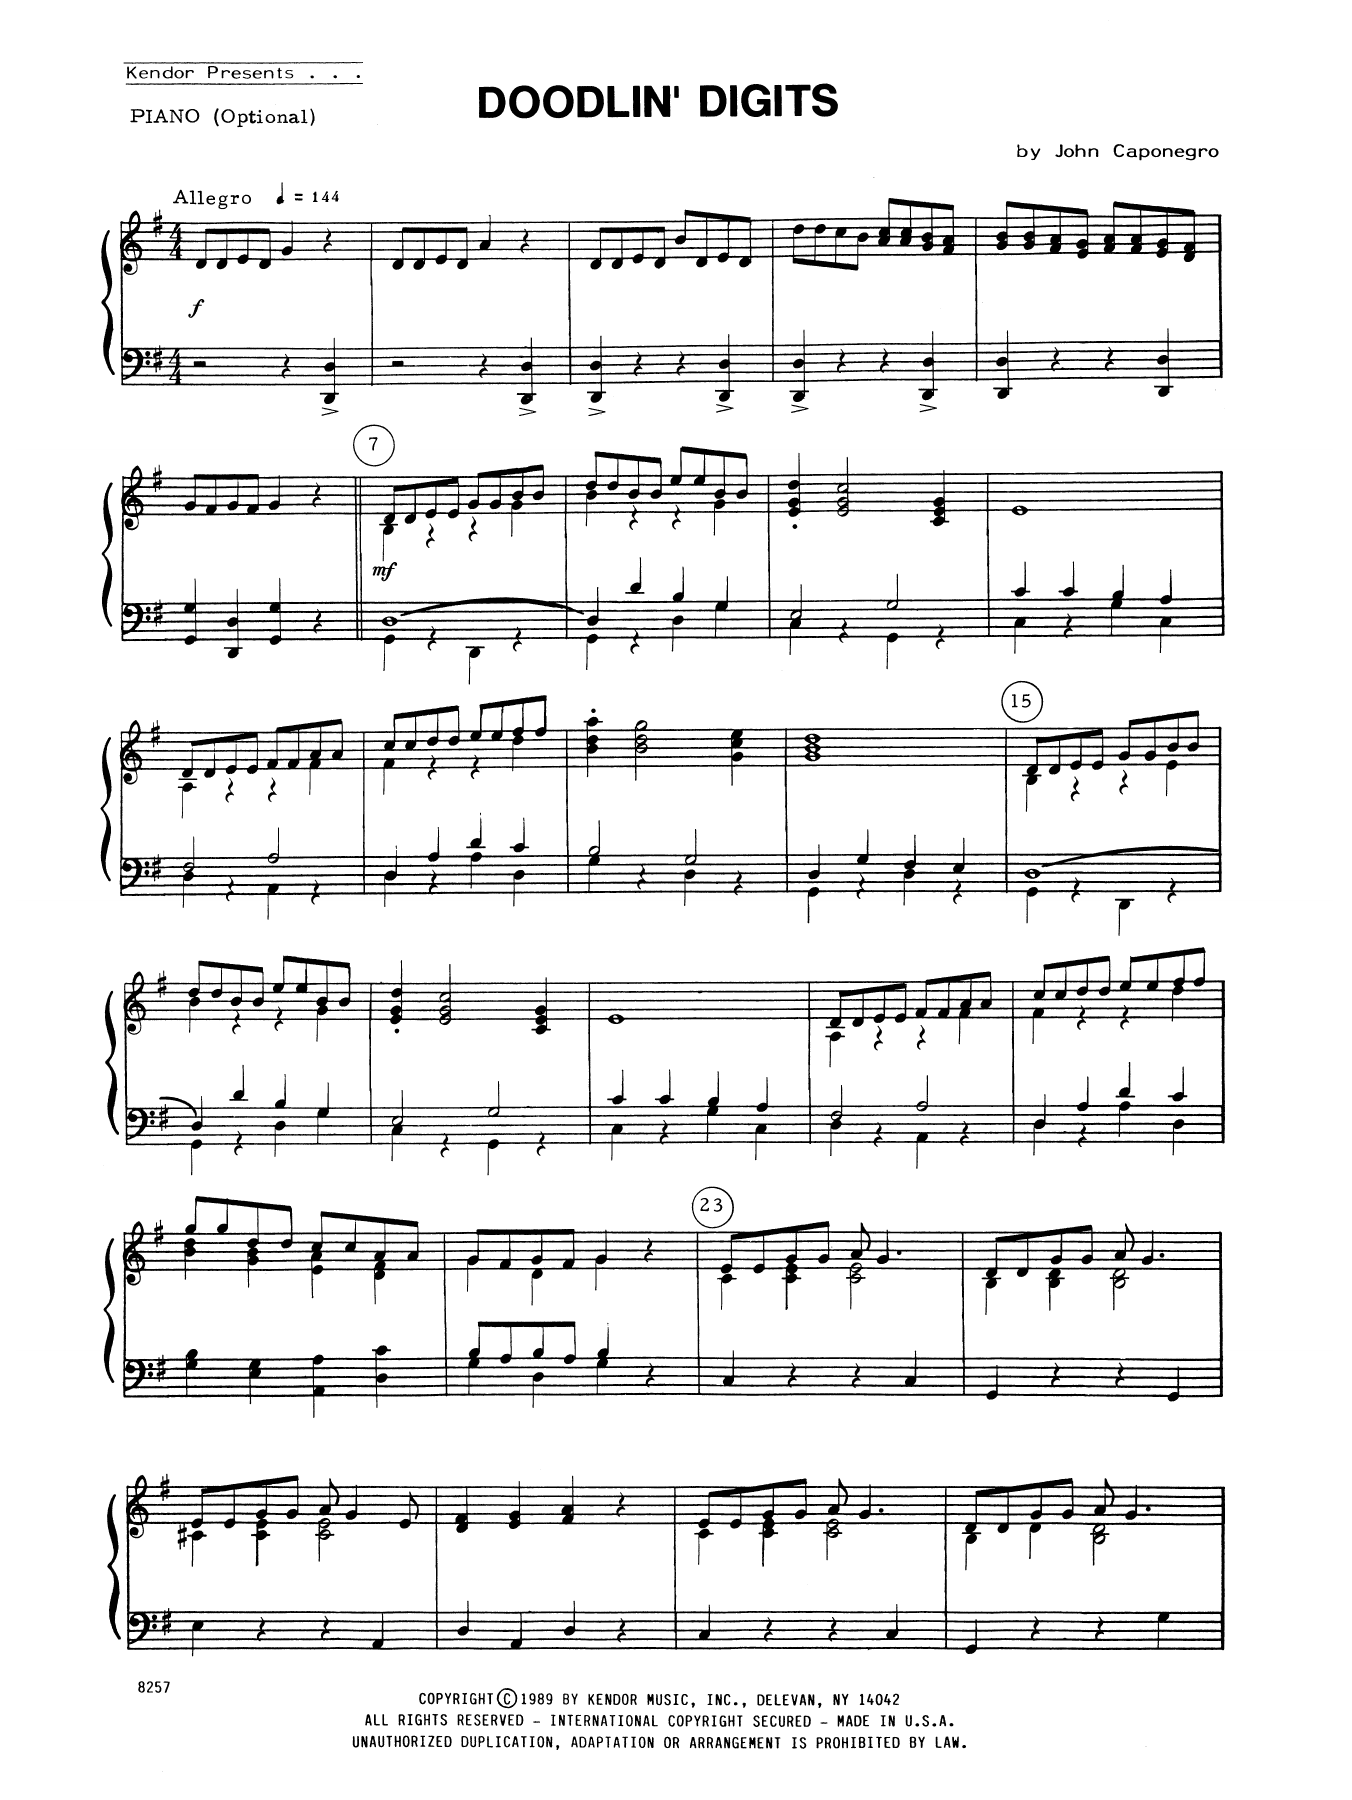 Download John Caponegro Doodlin' Digits - Piano Accompaniment Sheet Music